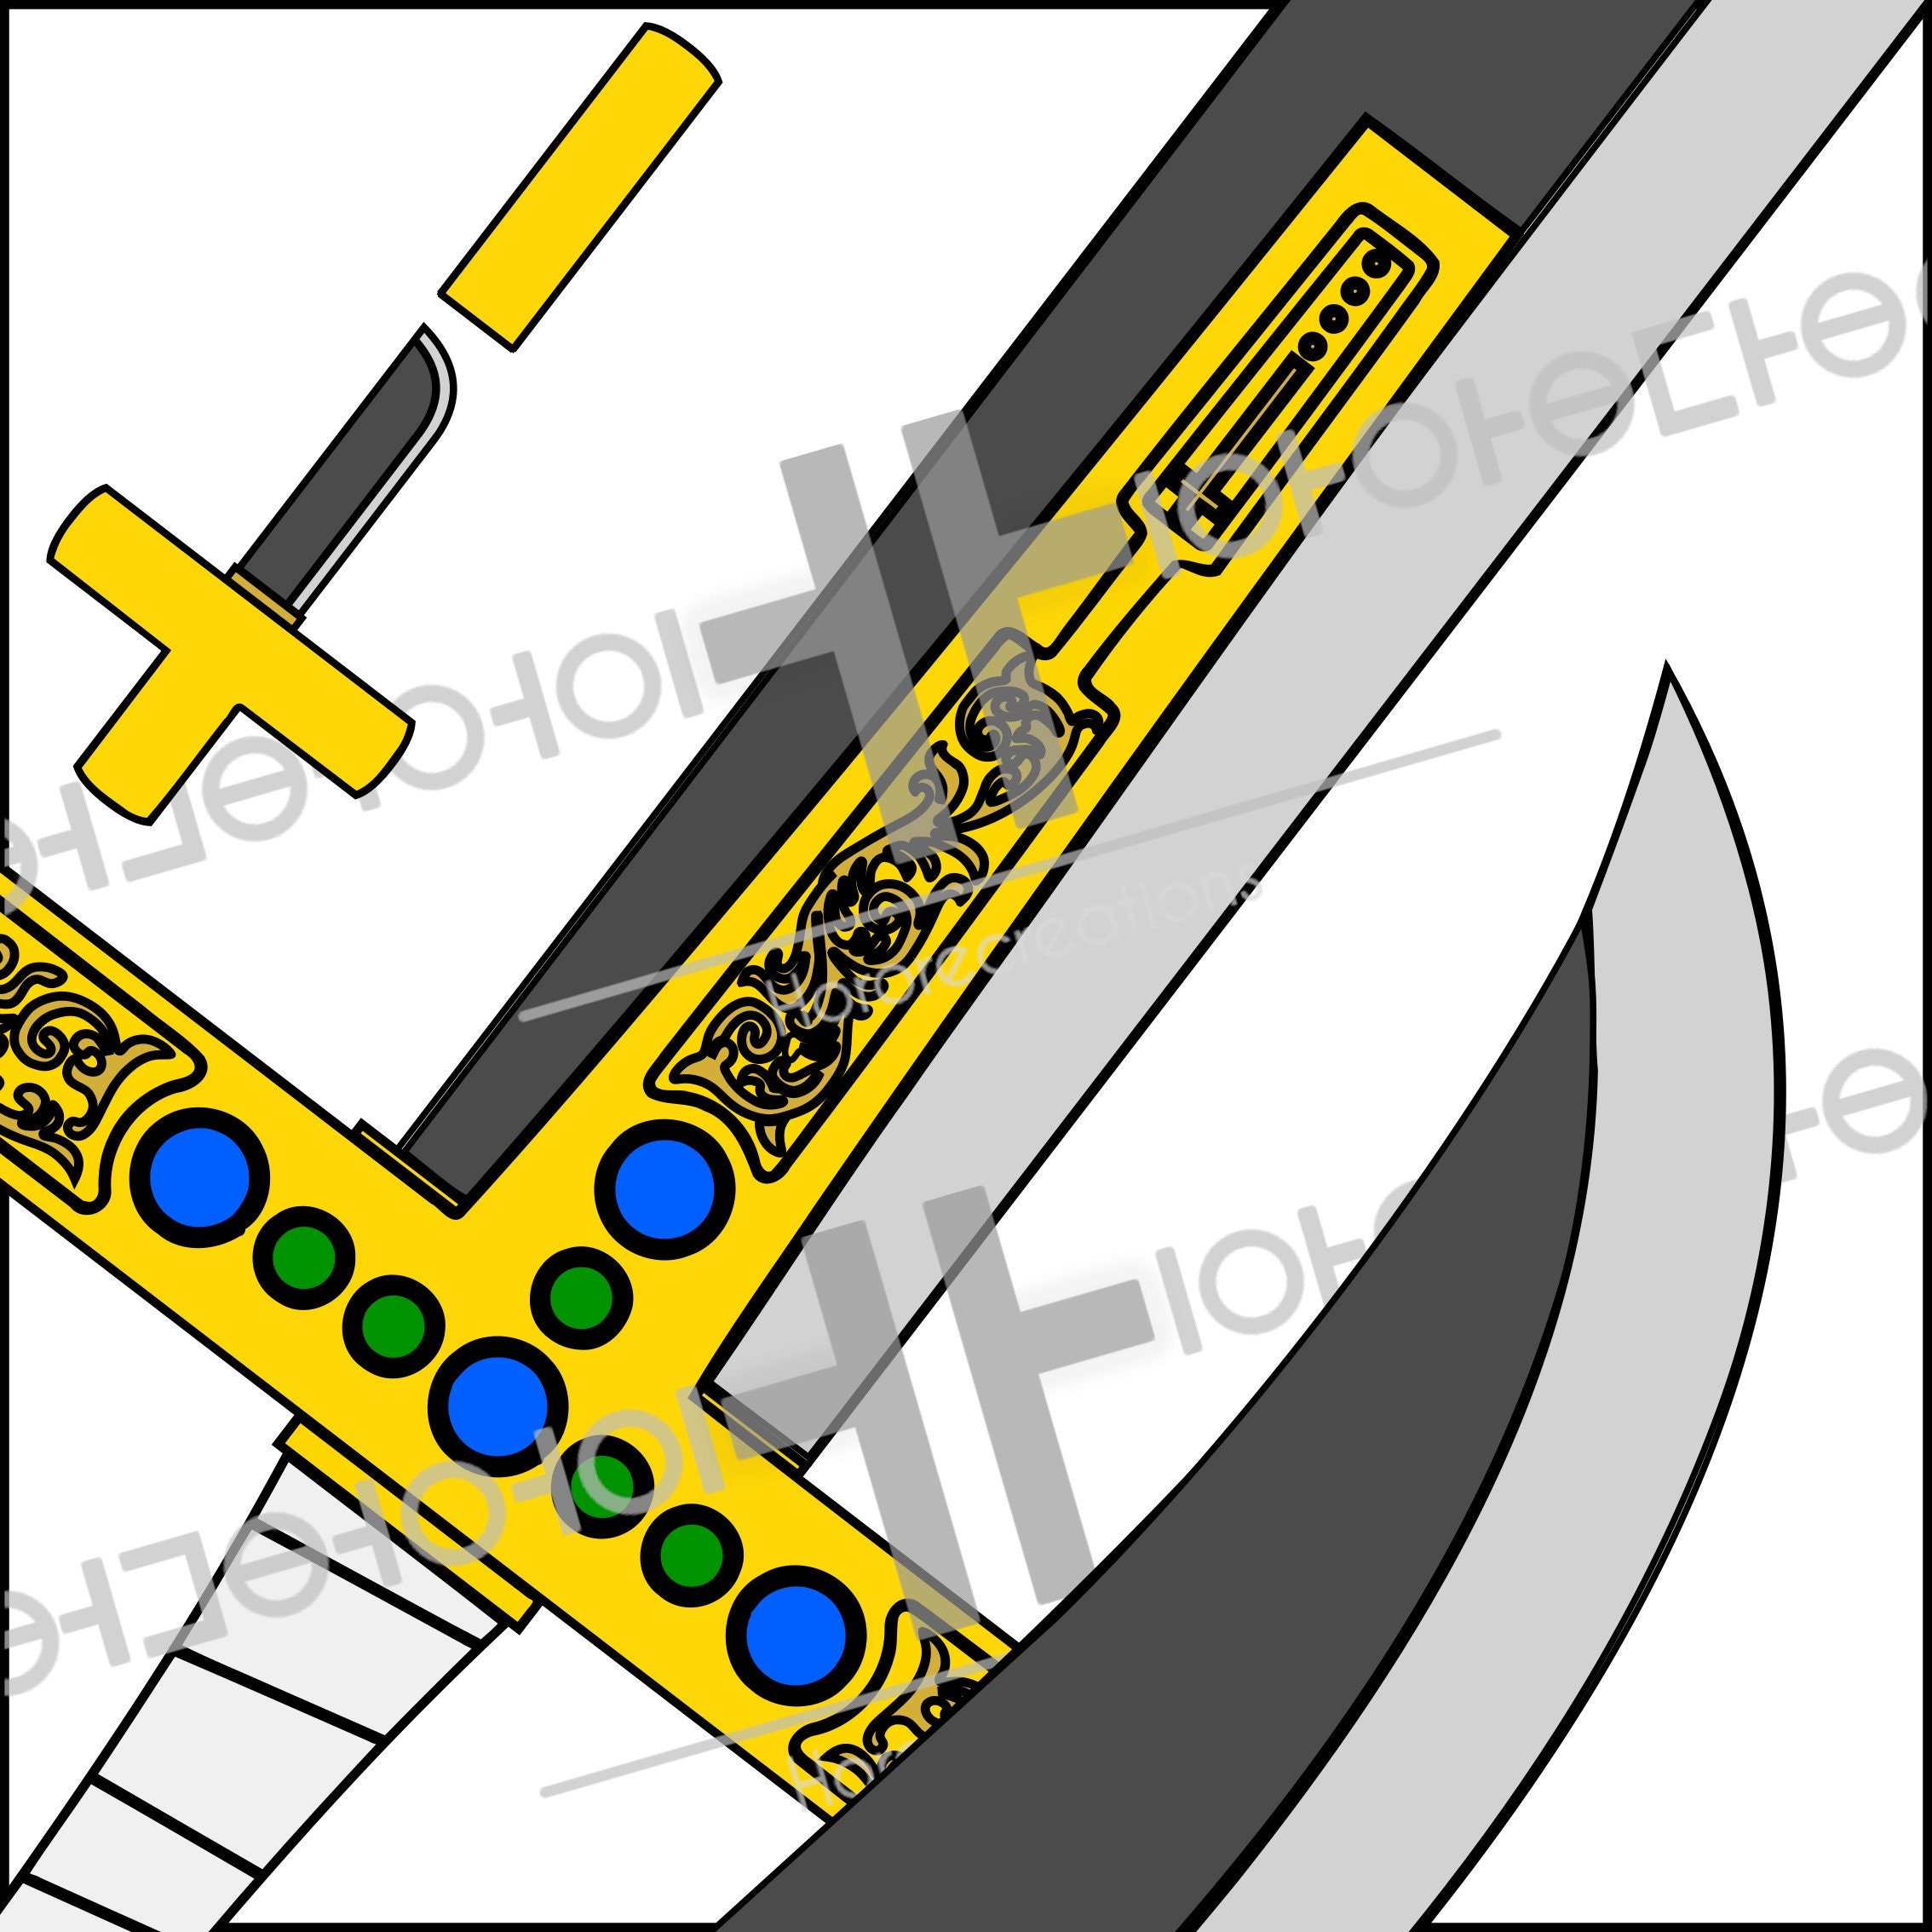 Collector's Edition Yoru Dracule Mihawk Supreme Black Cruciform Foam Sword  Replica Prop - Black, White, Blue, and Gold